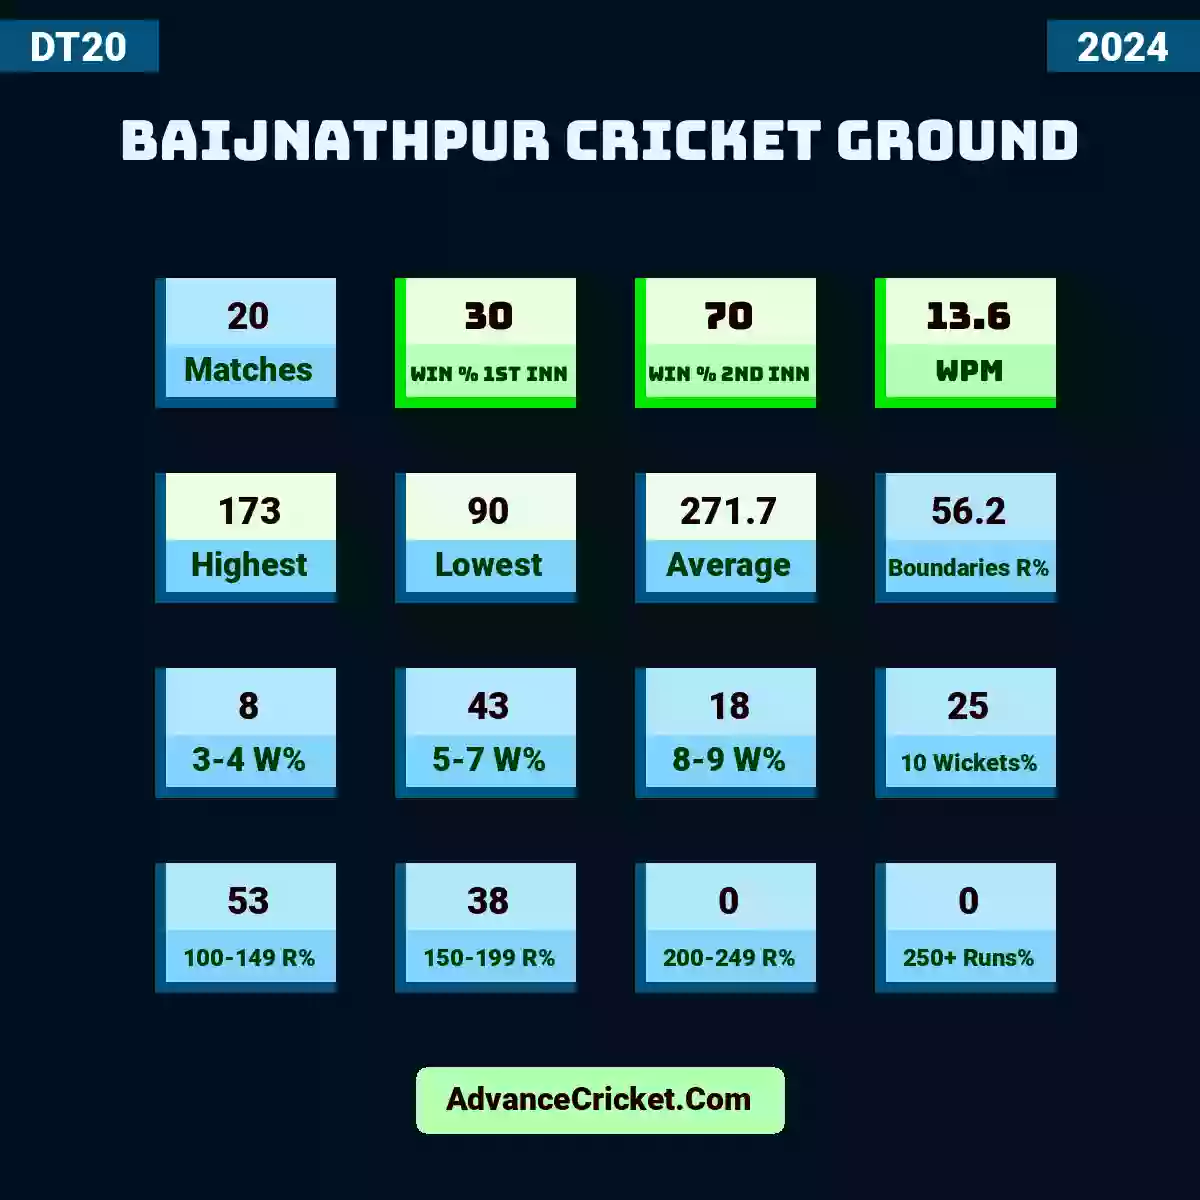 Image showing Baijnathpur Cricket Ground with Matches: 20, Win % 1st Inn: 30, Win % 2nd Inn: 70, WPM: 13.6, Highest: 173, Lowest: 90, Average: 271.7, Boundaries R%: 56.2, 3-4 W%: 8, 5-7 W%: 43, 8-9 W%: 18, 10 Wickets%: 25, 100-149 R%: 53, 150-199 R%: 38, 200-249 R%: 0, 250+ Runs%: 0.